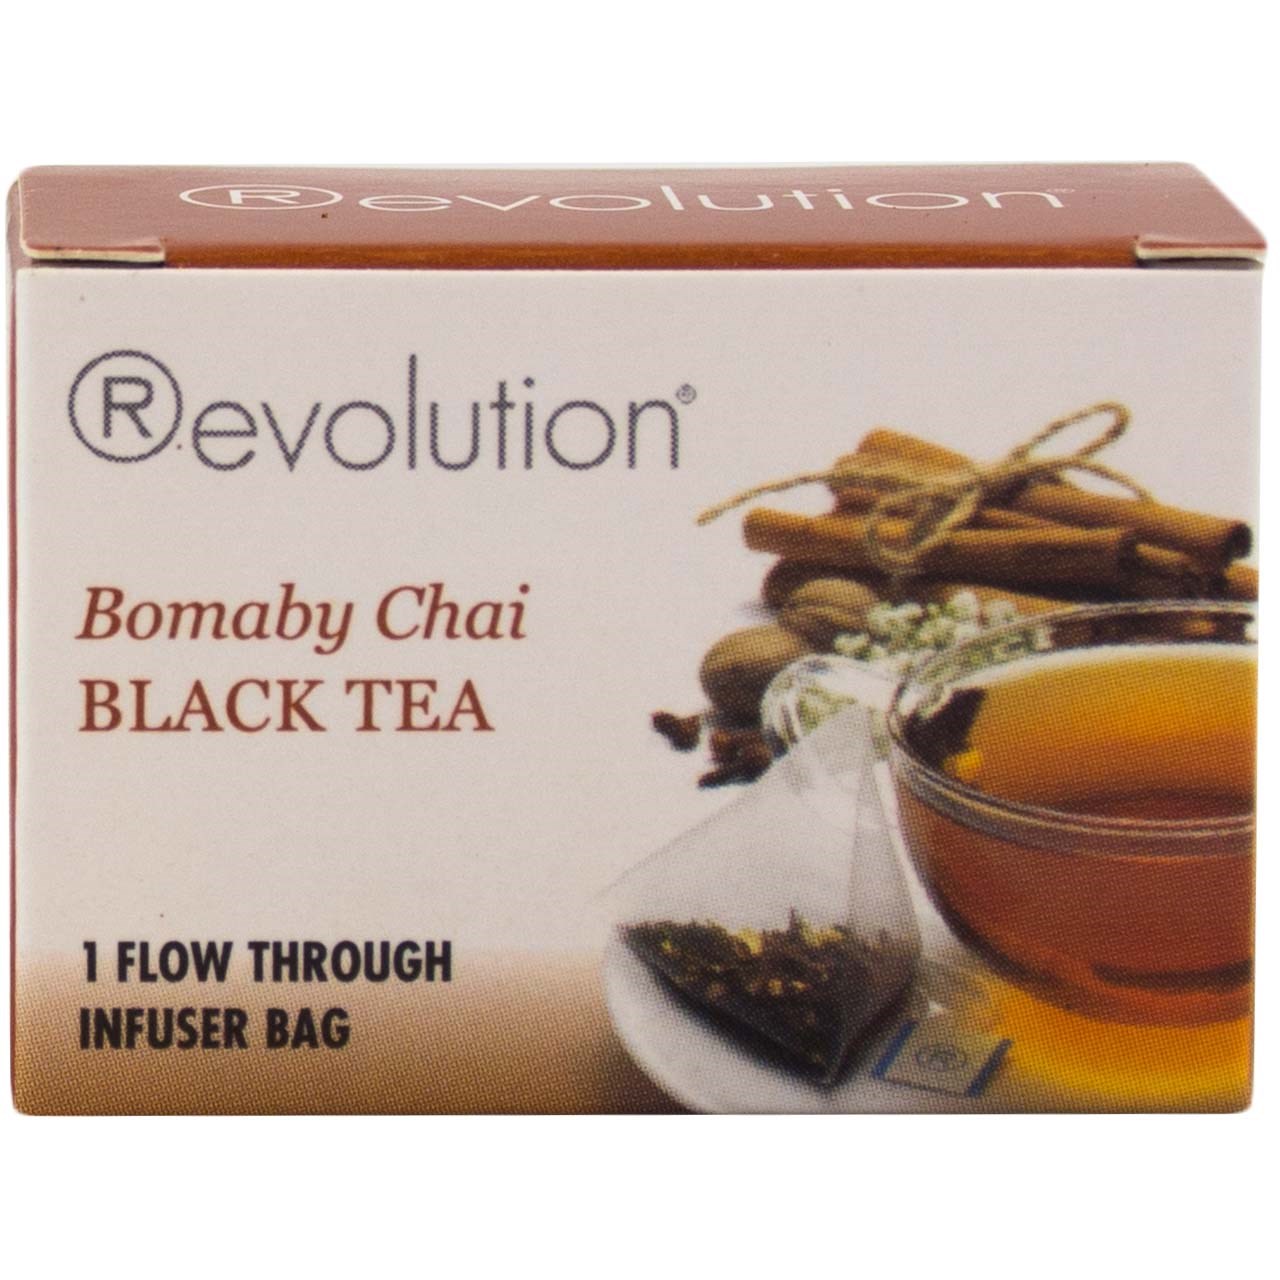 بسته چای روولوشن مدل Bomaby Chai